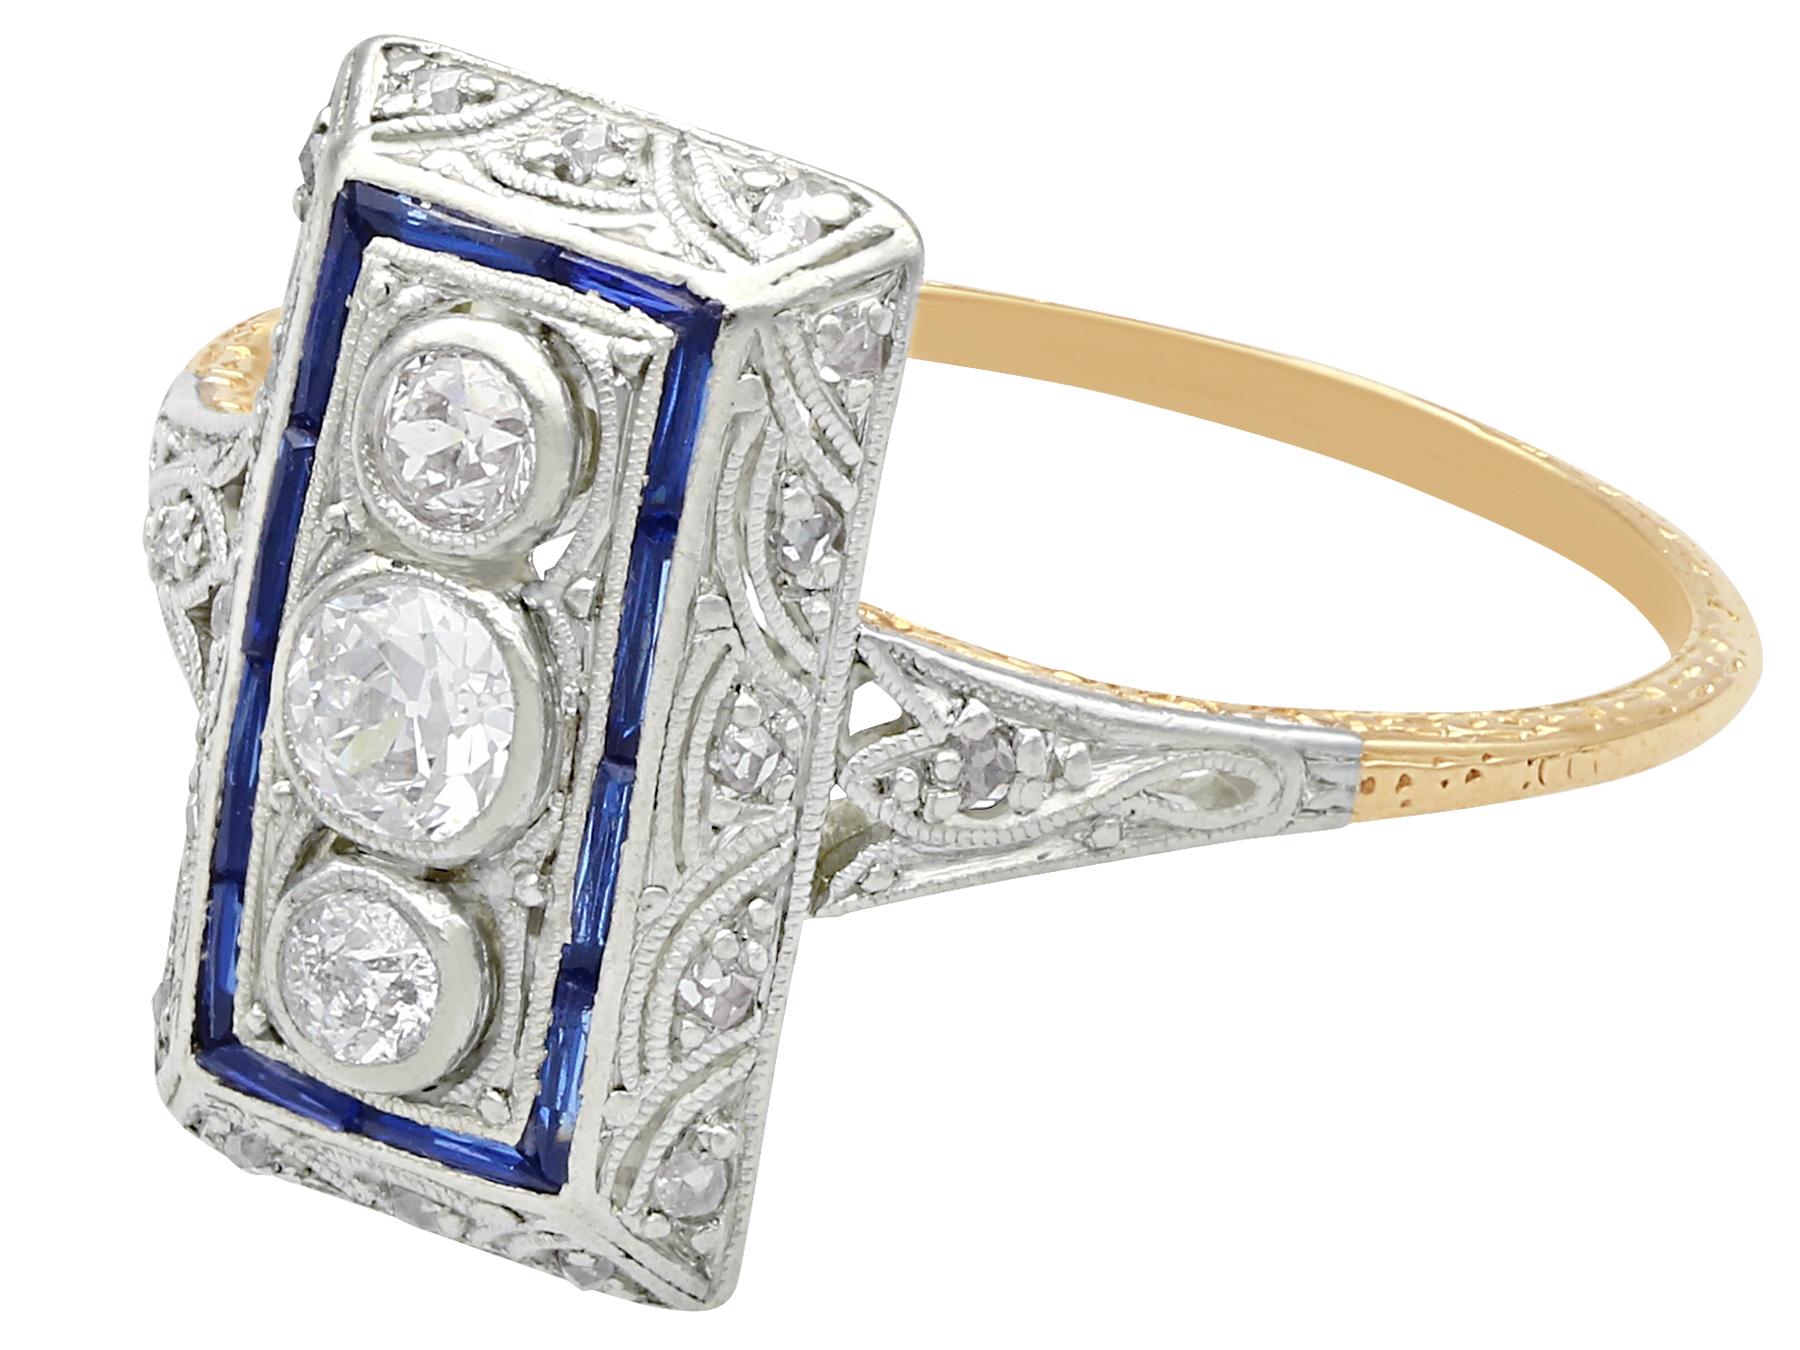 1920 sapphire and diamond ring